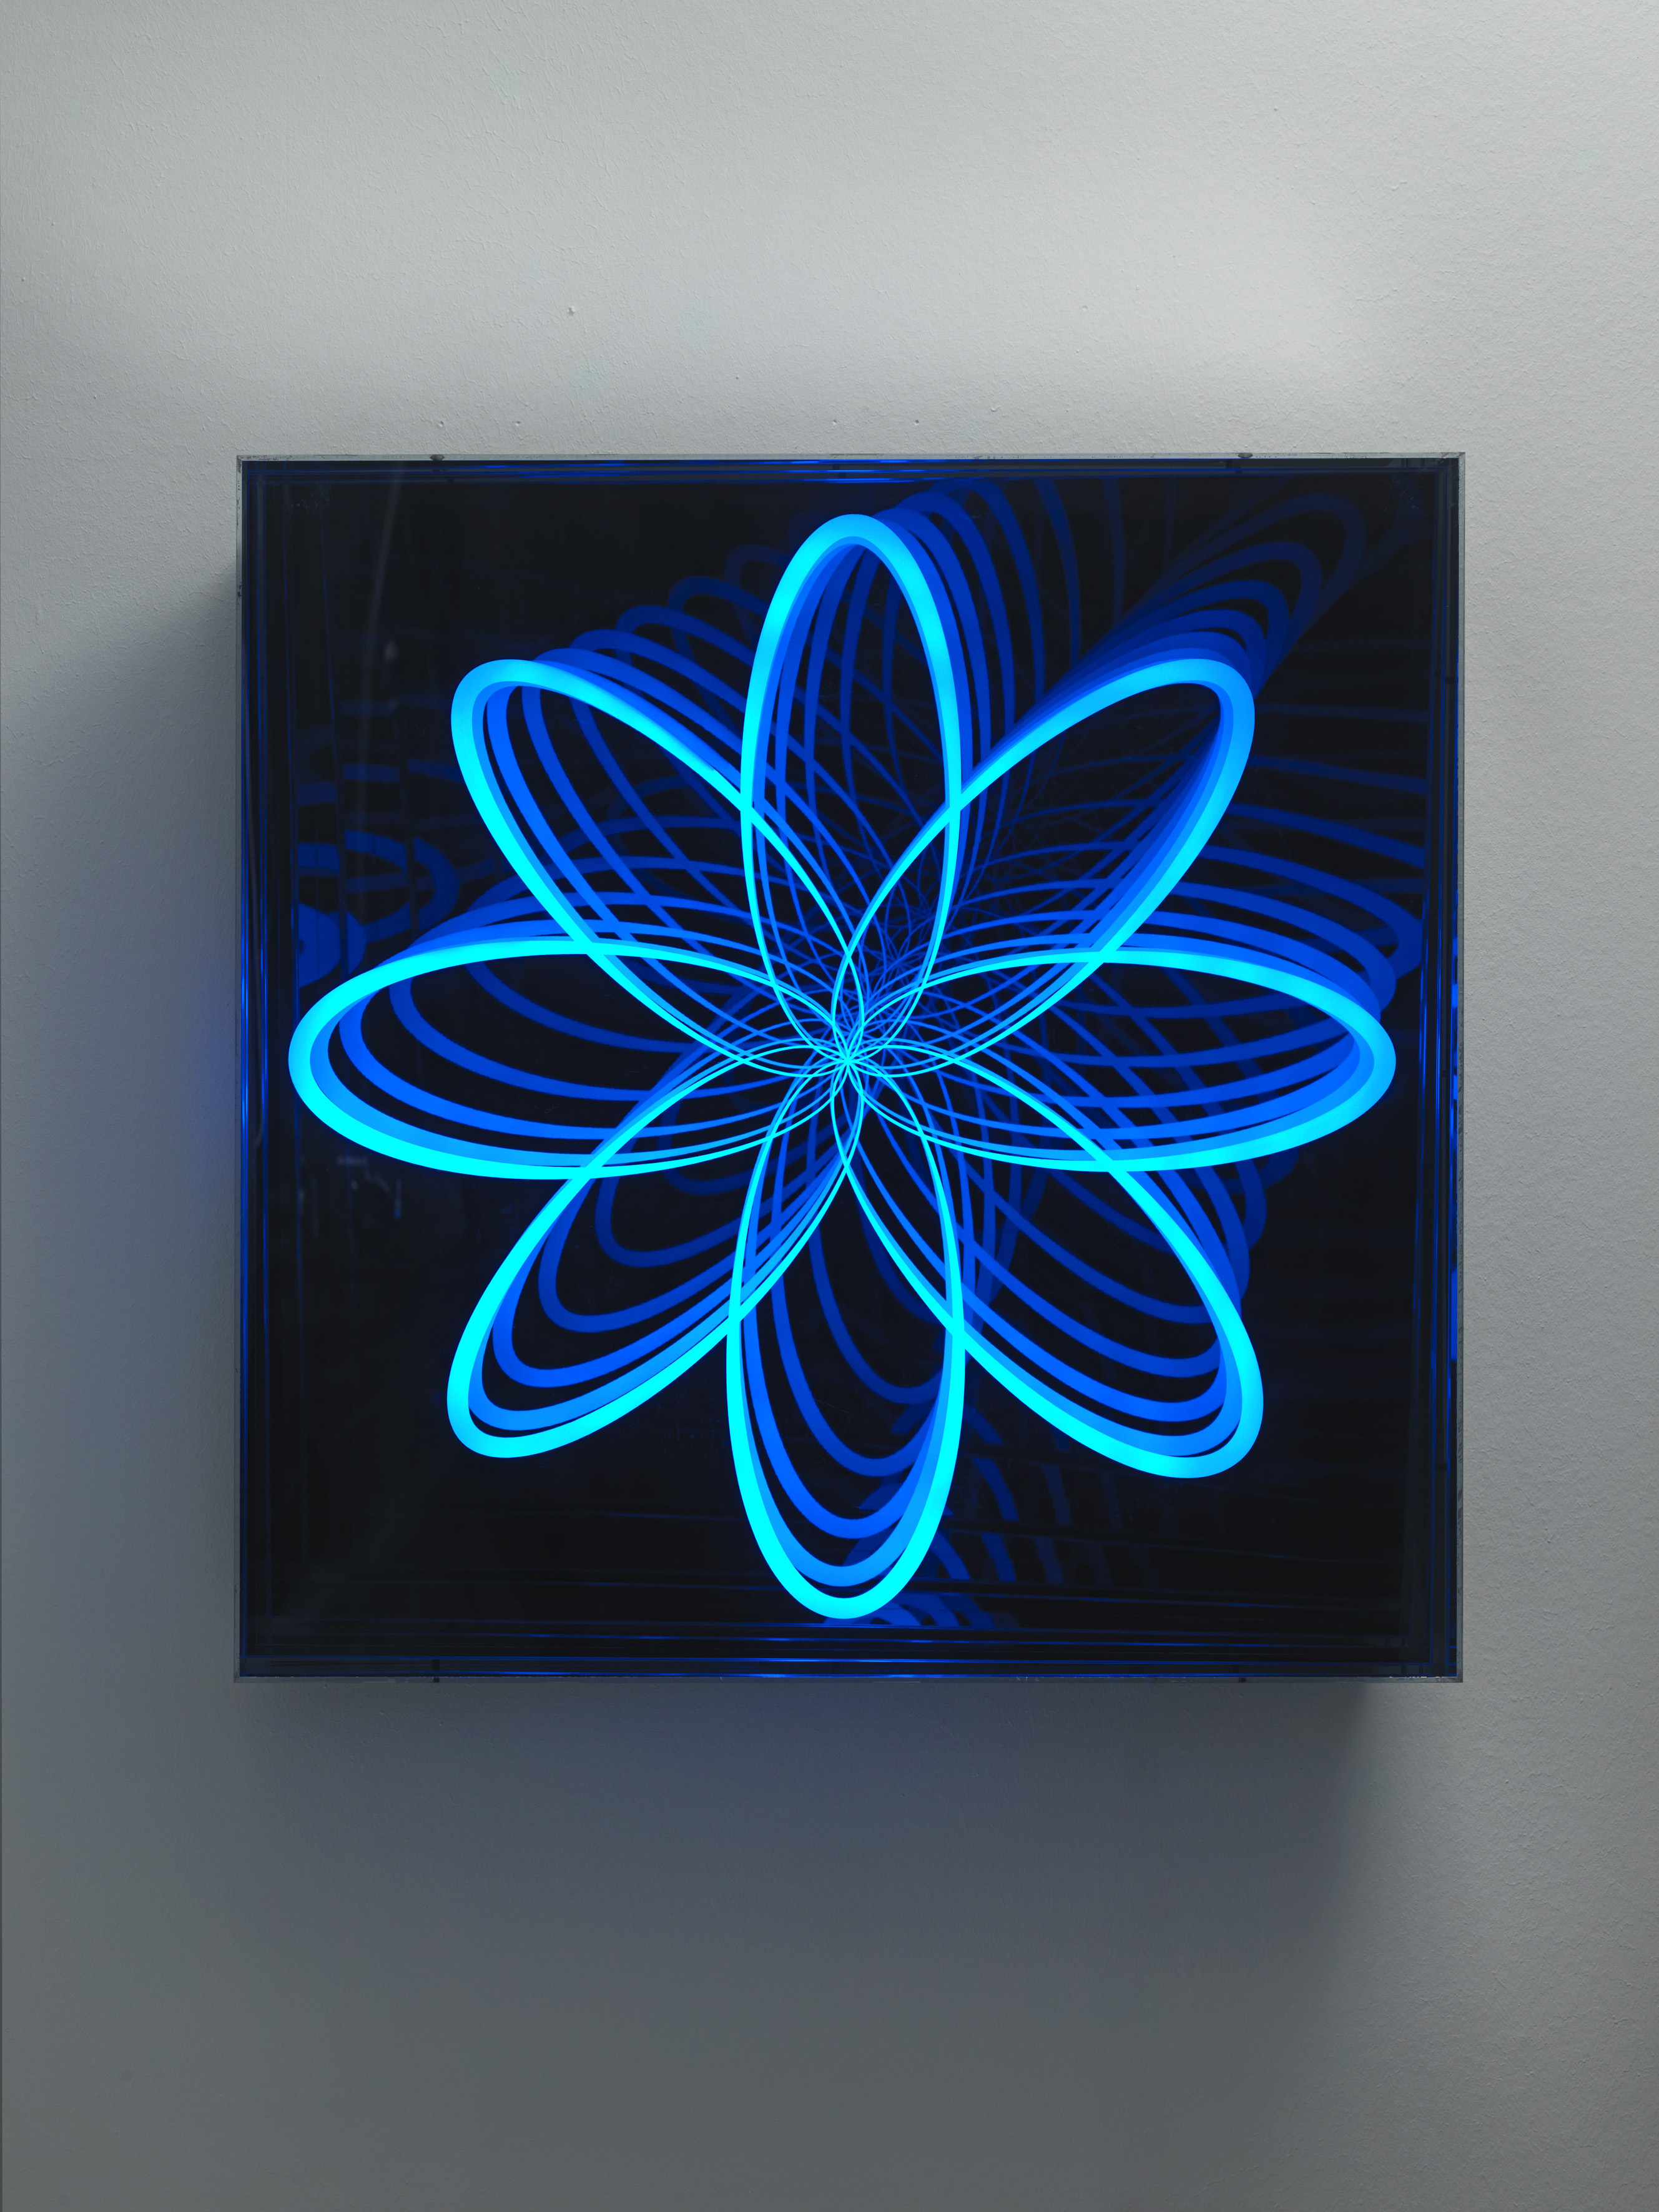 Hans Kotter - Organic Orbit, metal, plexiglass and mirror LED, 60 x 60 x 16 cm, Ed. 3/8, 2012